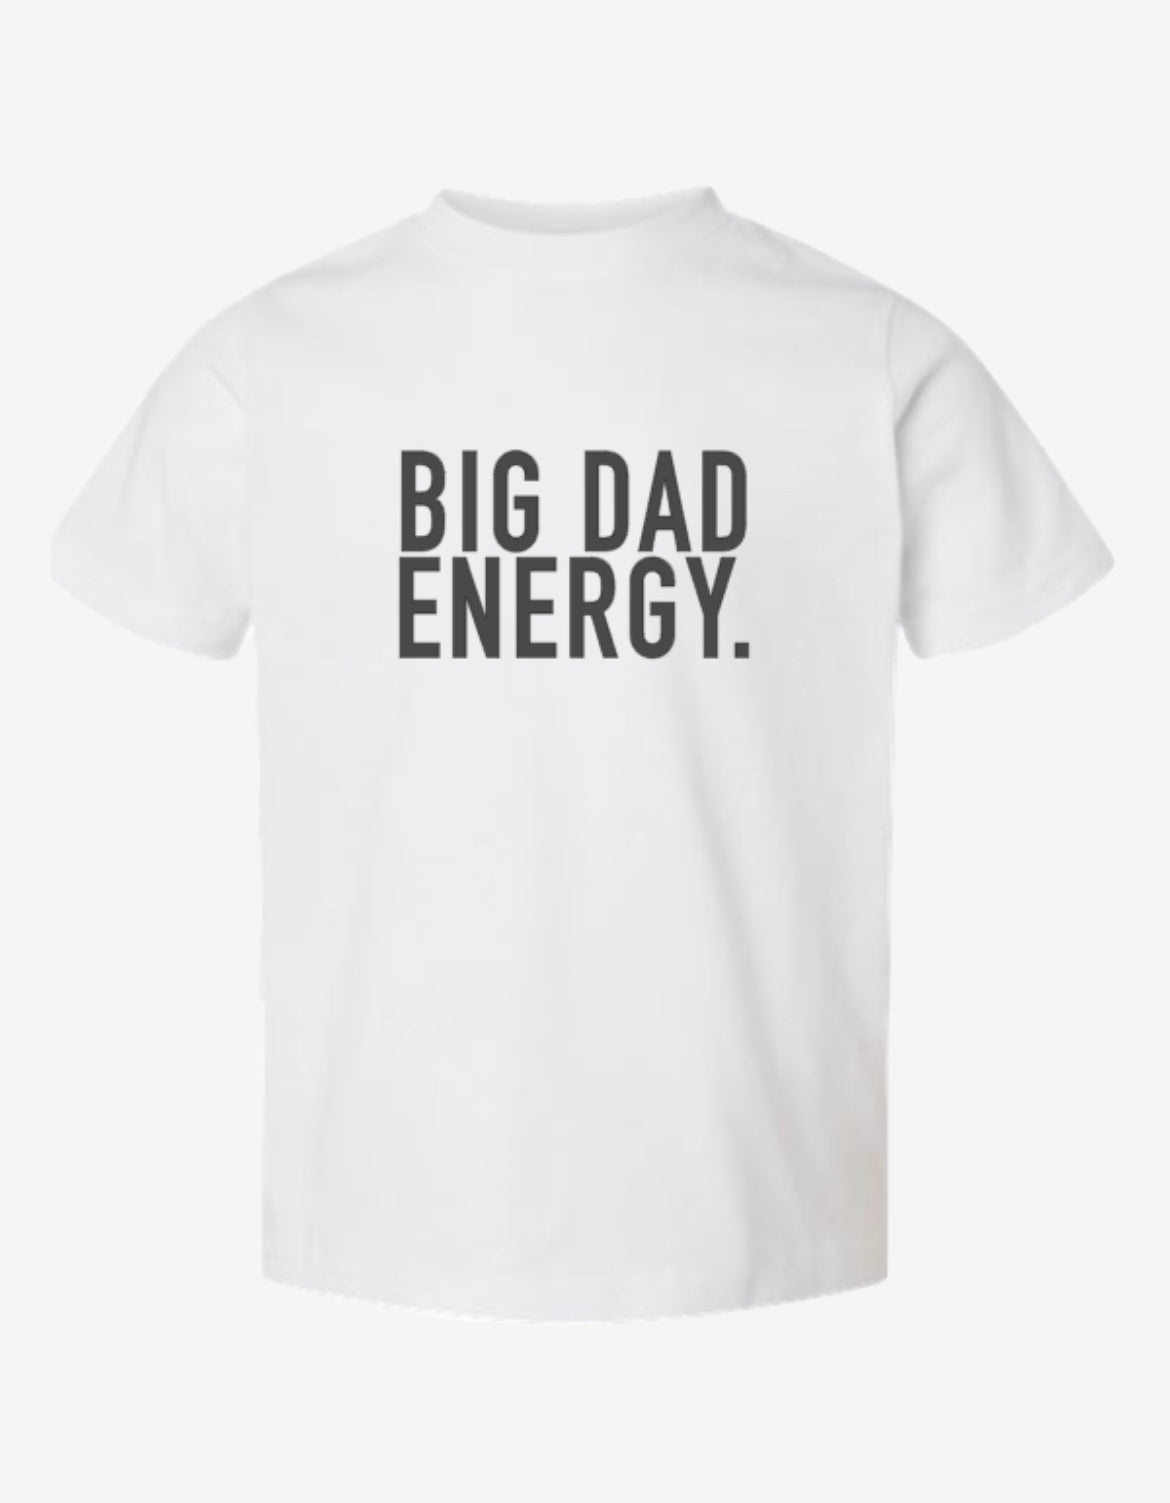 BIG DAD ENERGY. Adult Tee